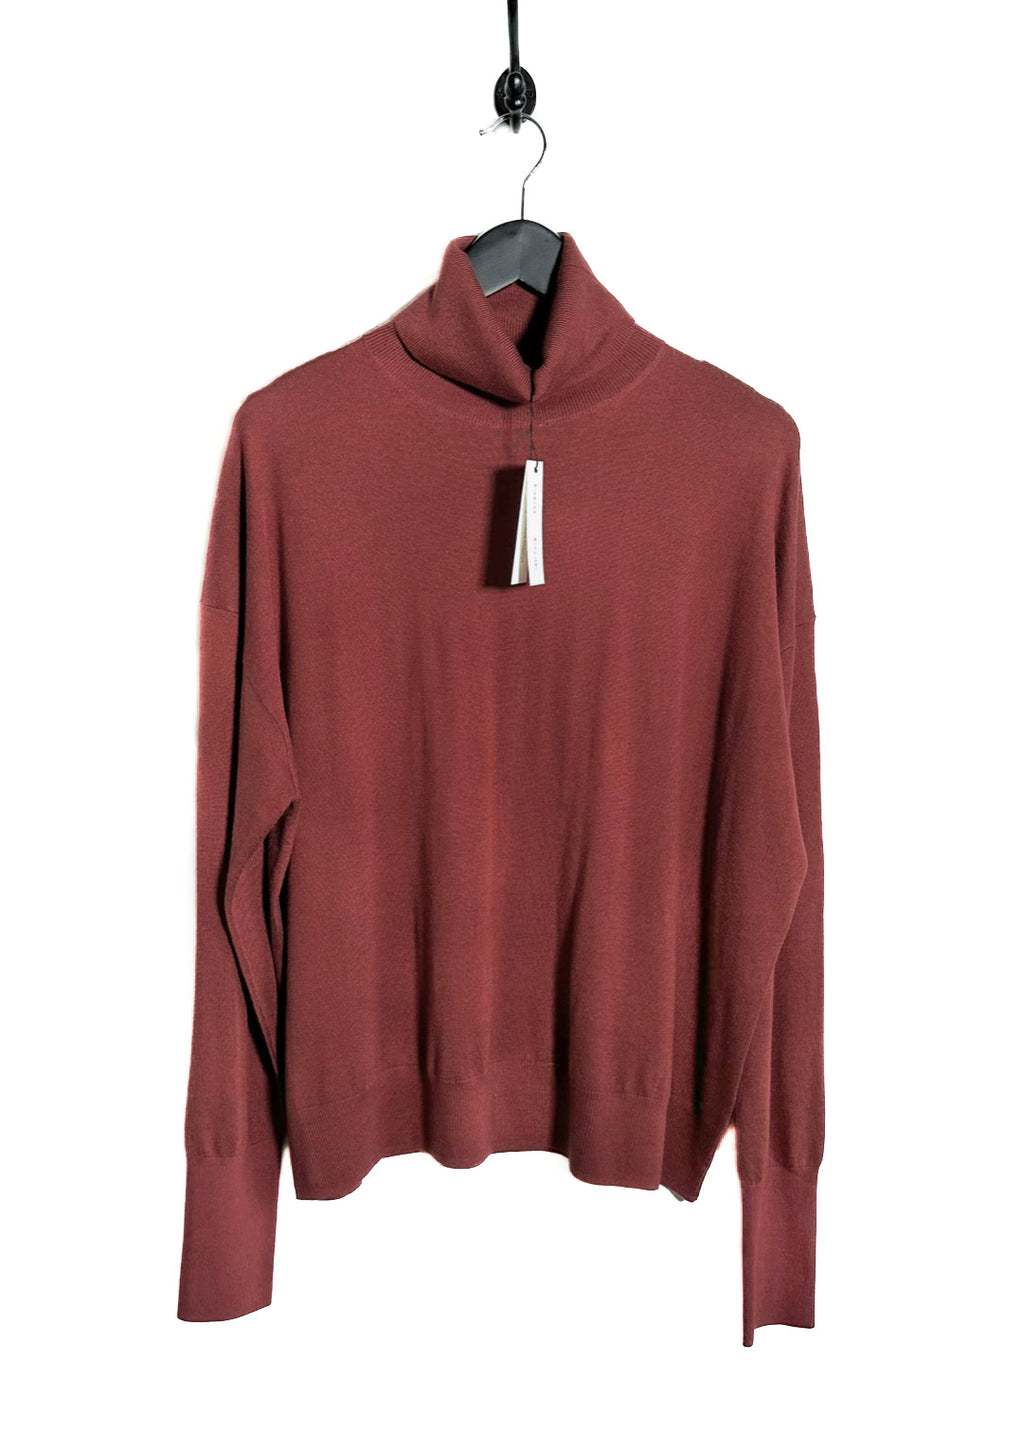 Proenza Schouler Rust Silk Cashmere Blend Turtleneck Sweater